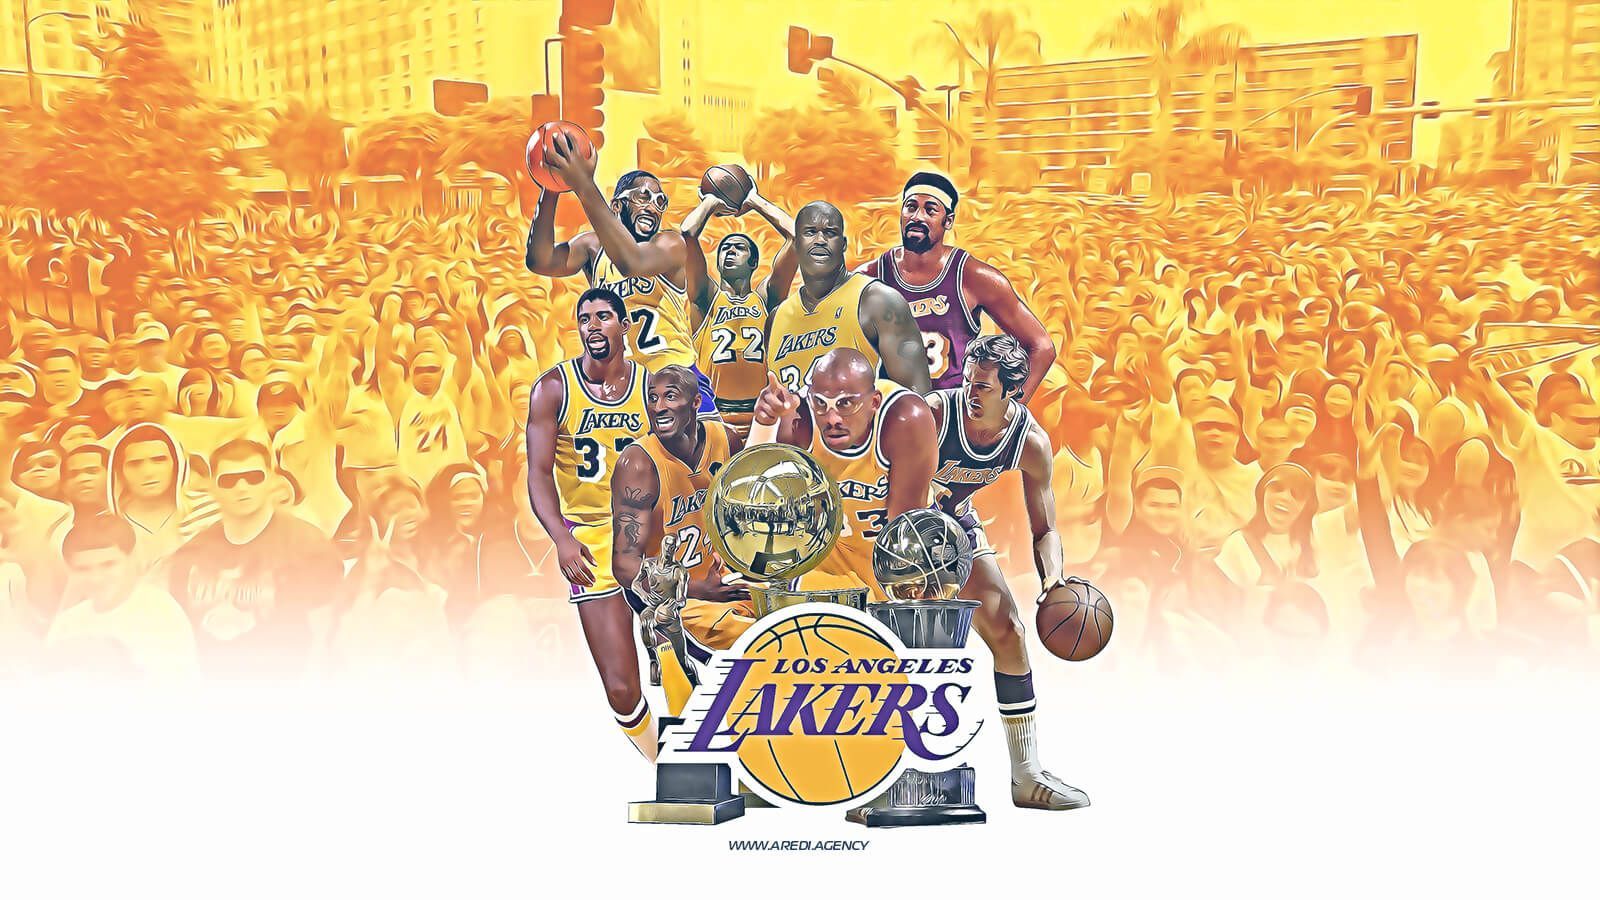 Lakers Showtime Wallpaper. Showtime Kenworth Wallpaper, Lakers Showtime Wallpaper and Showtime Lakers Wallpaper